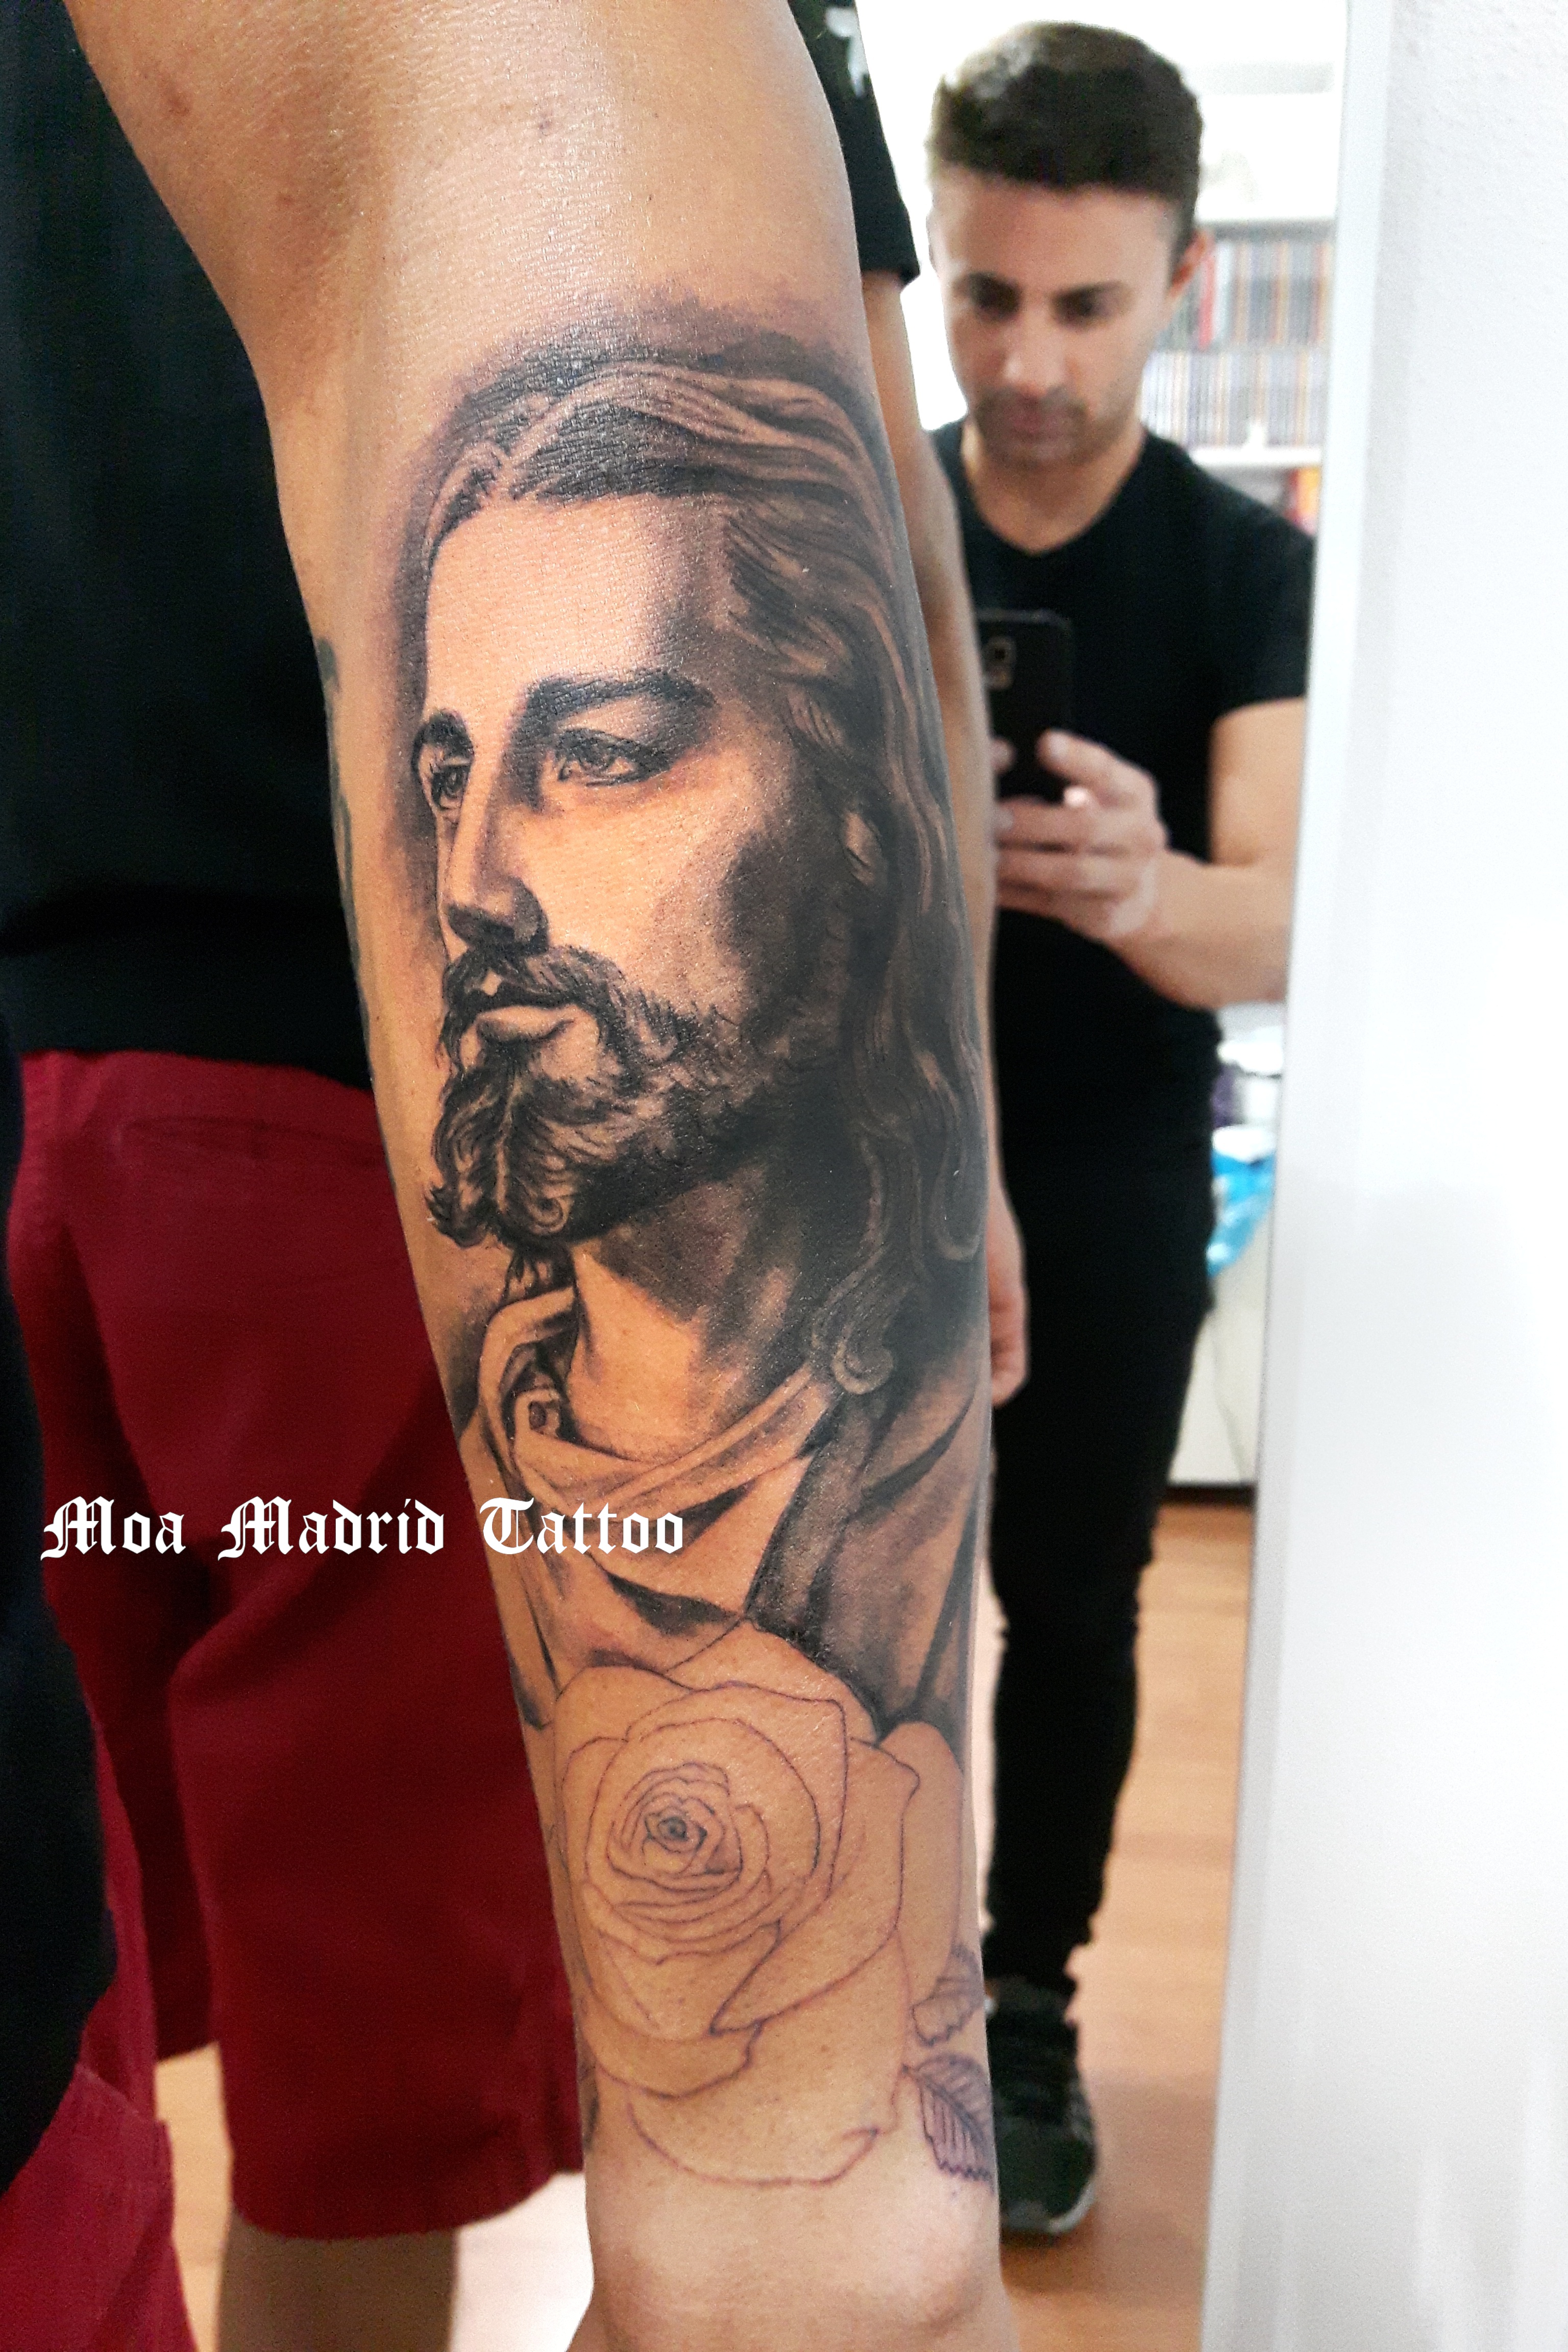 Tatuaje de Cristo terminado, y líneas de la rosa